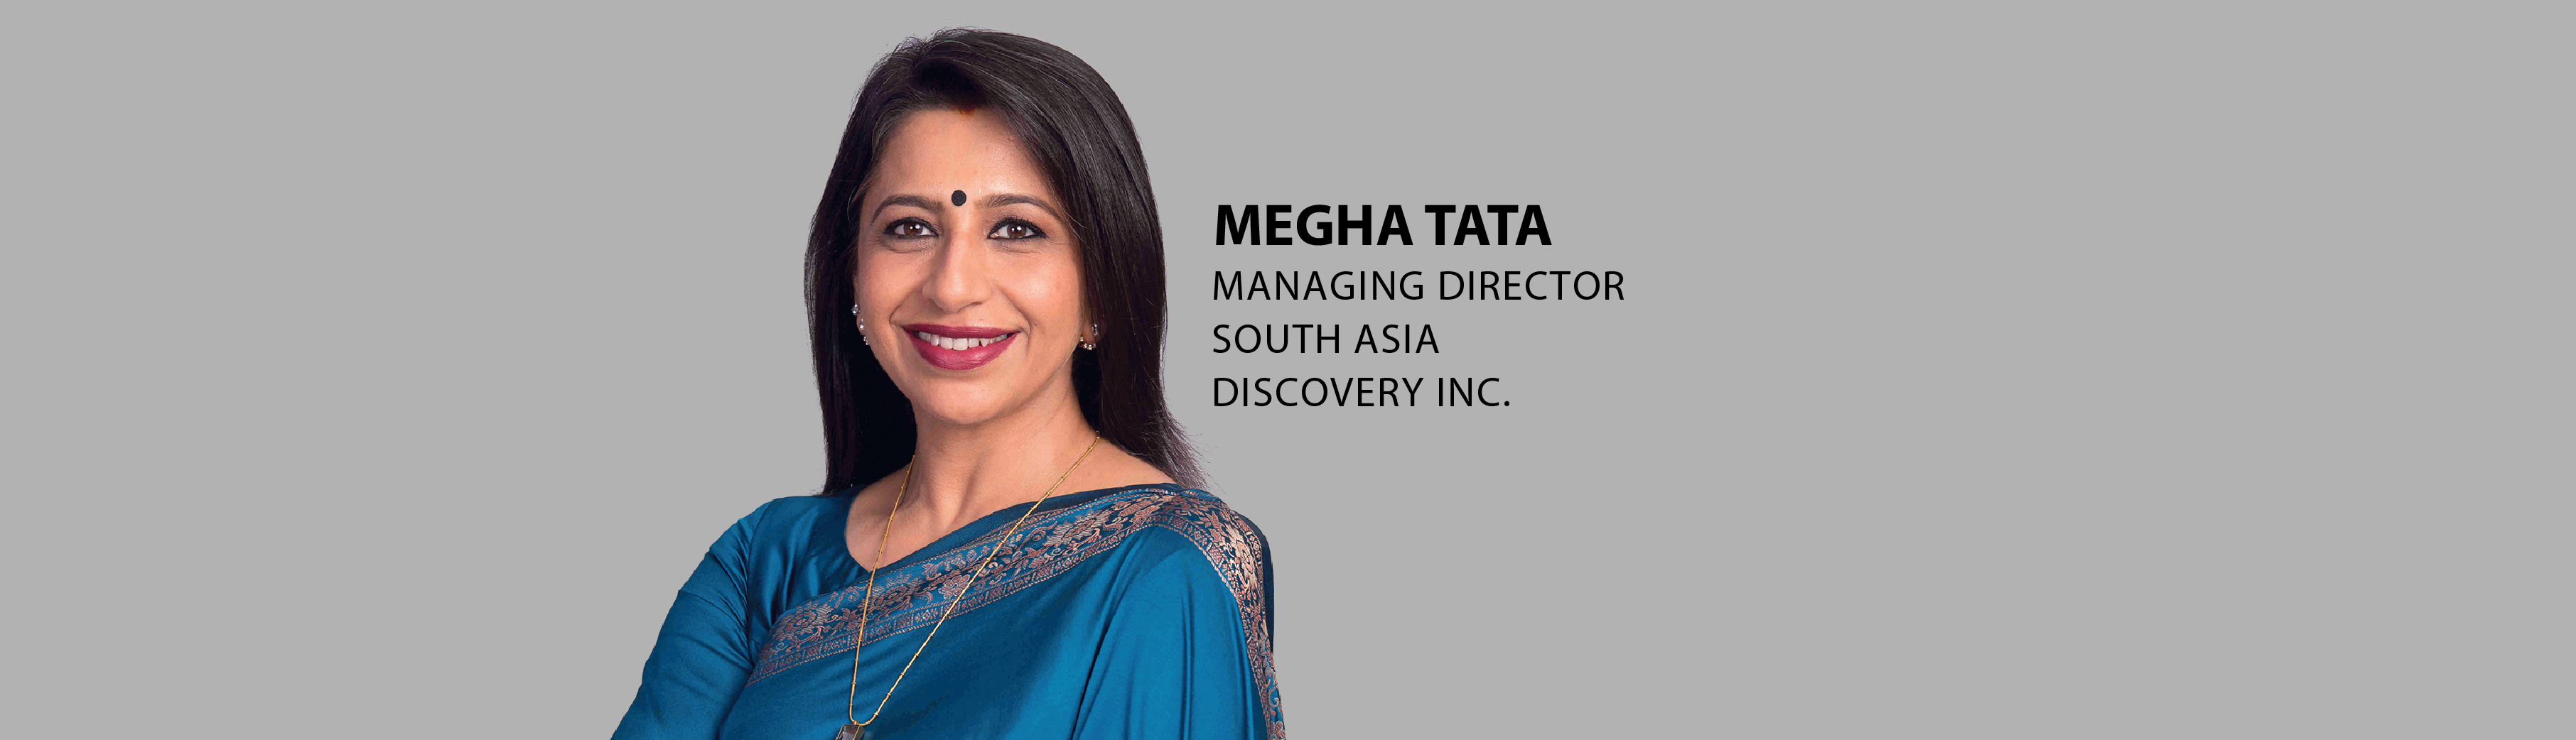 Megha Tata, Managing Director, Discovery Inc